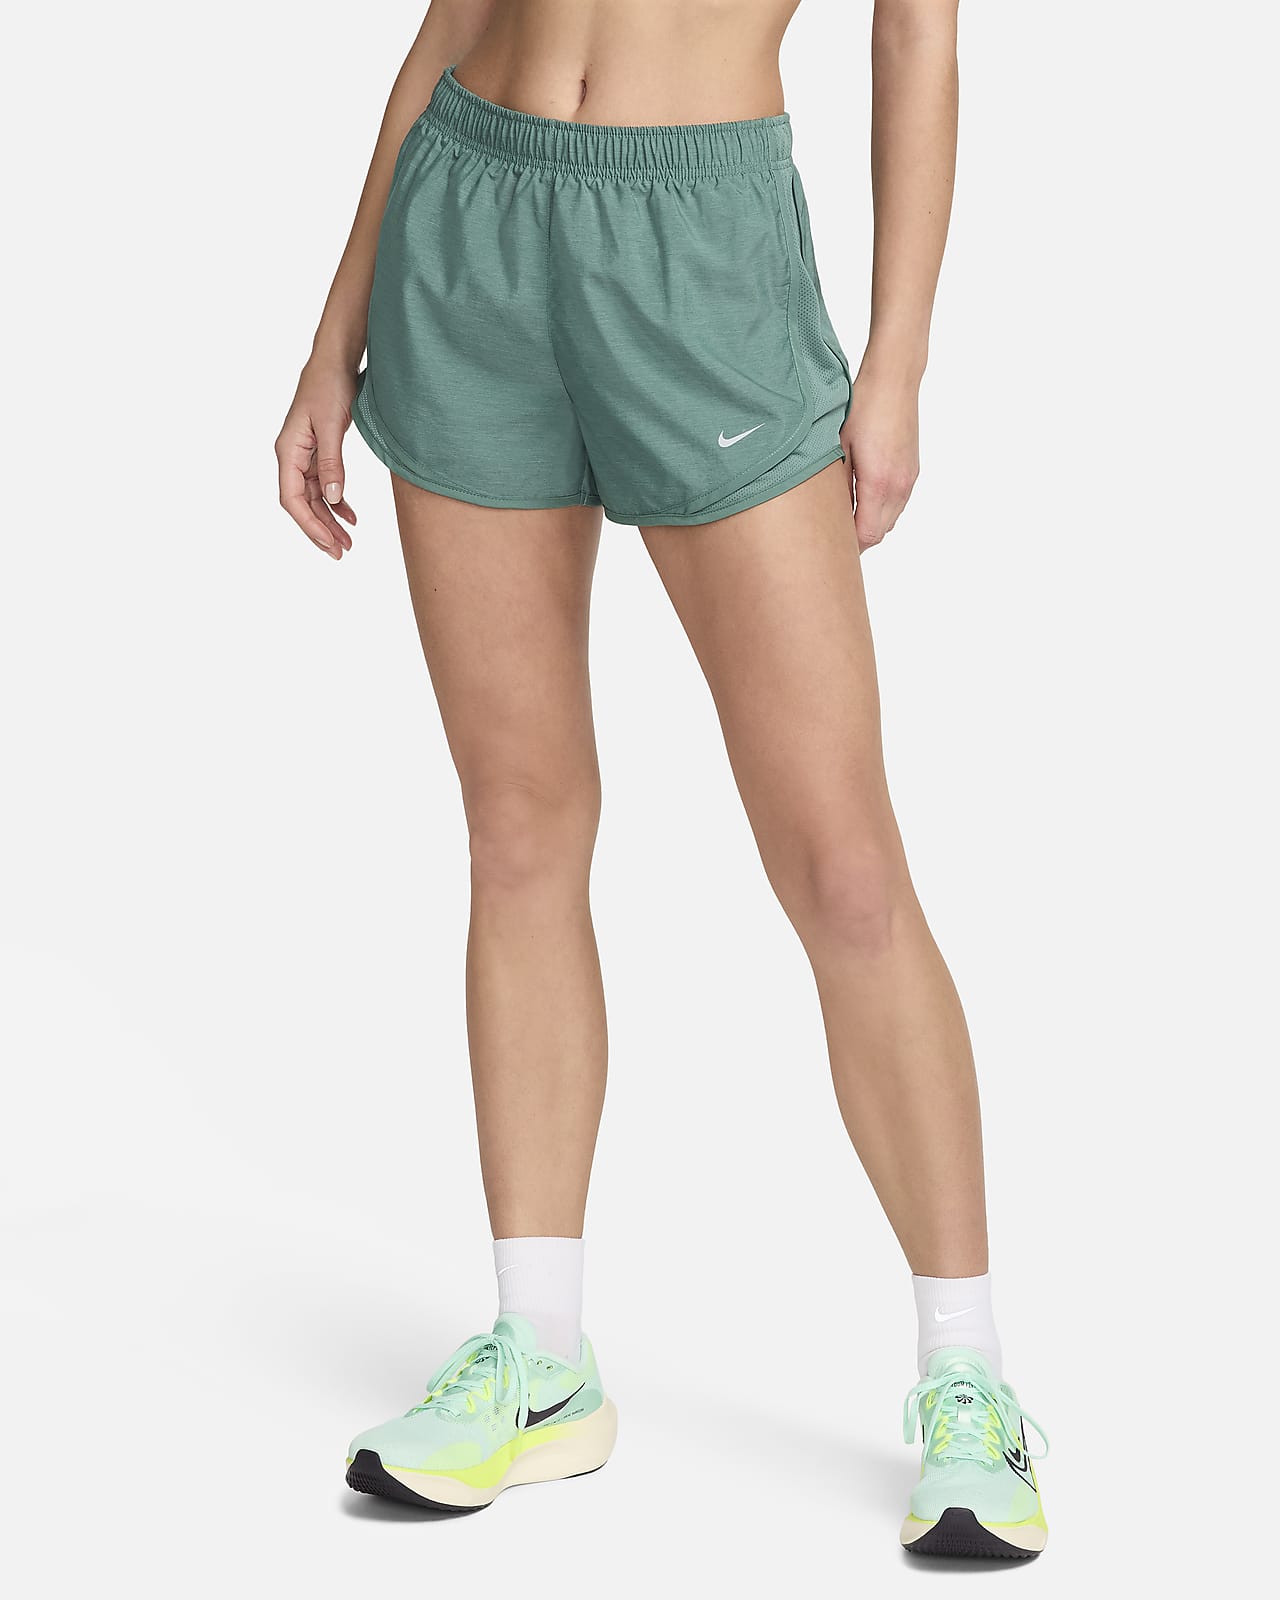 Shorts de running con ropa interior forrada para mujer Nike Tempo